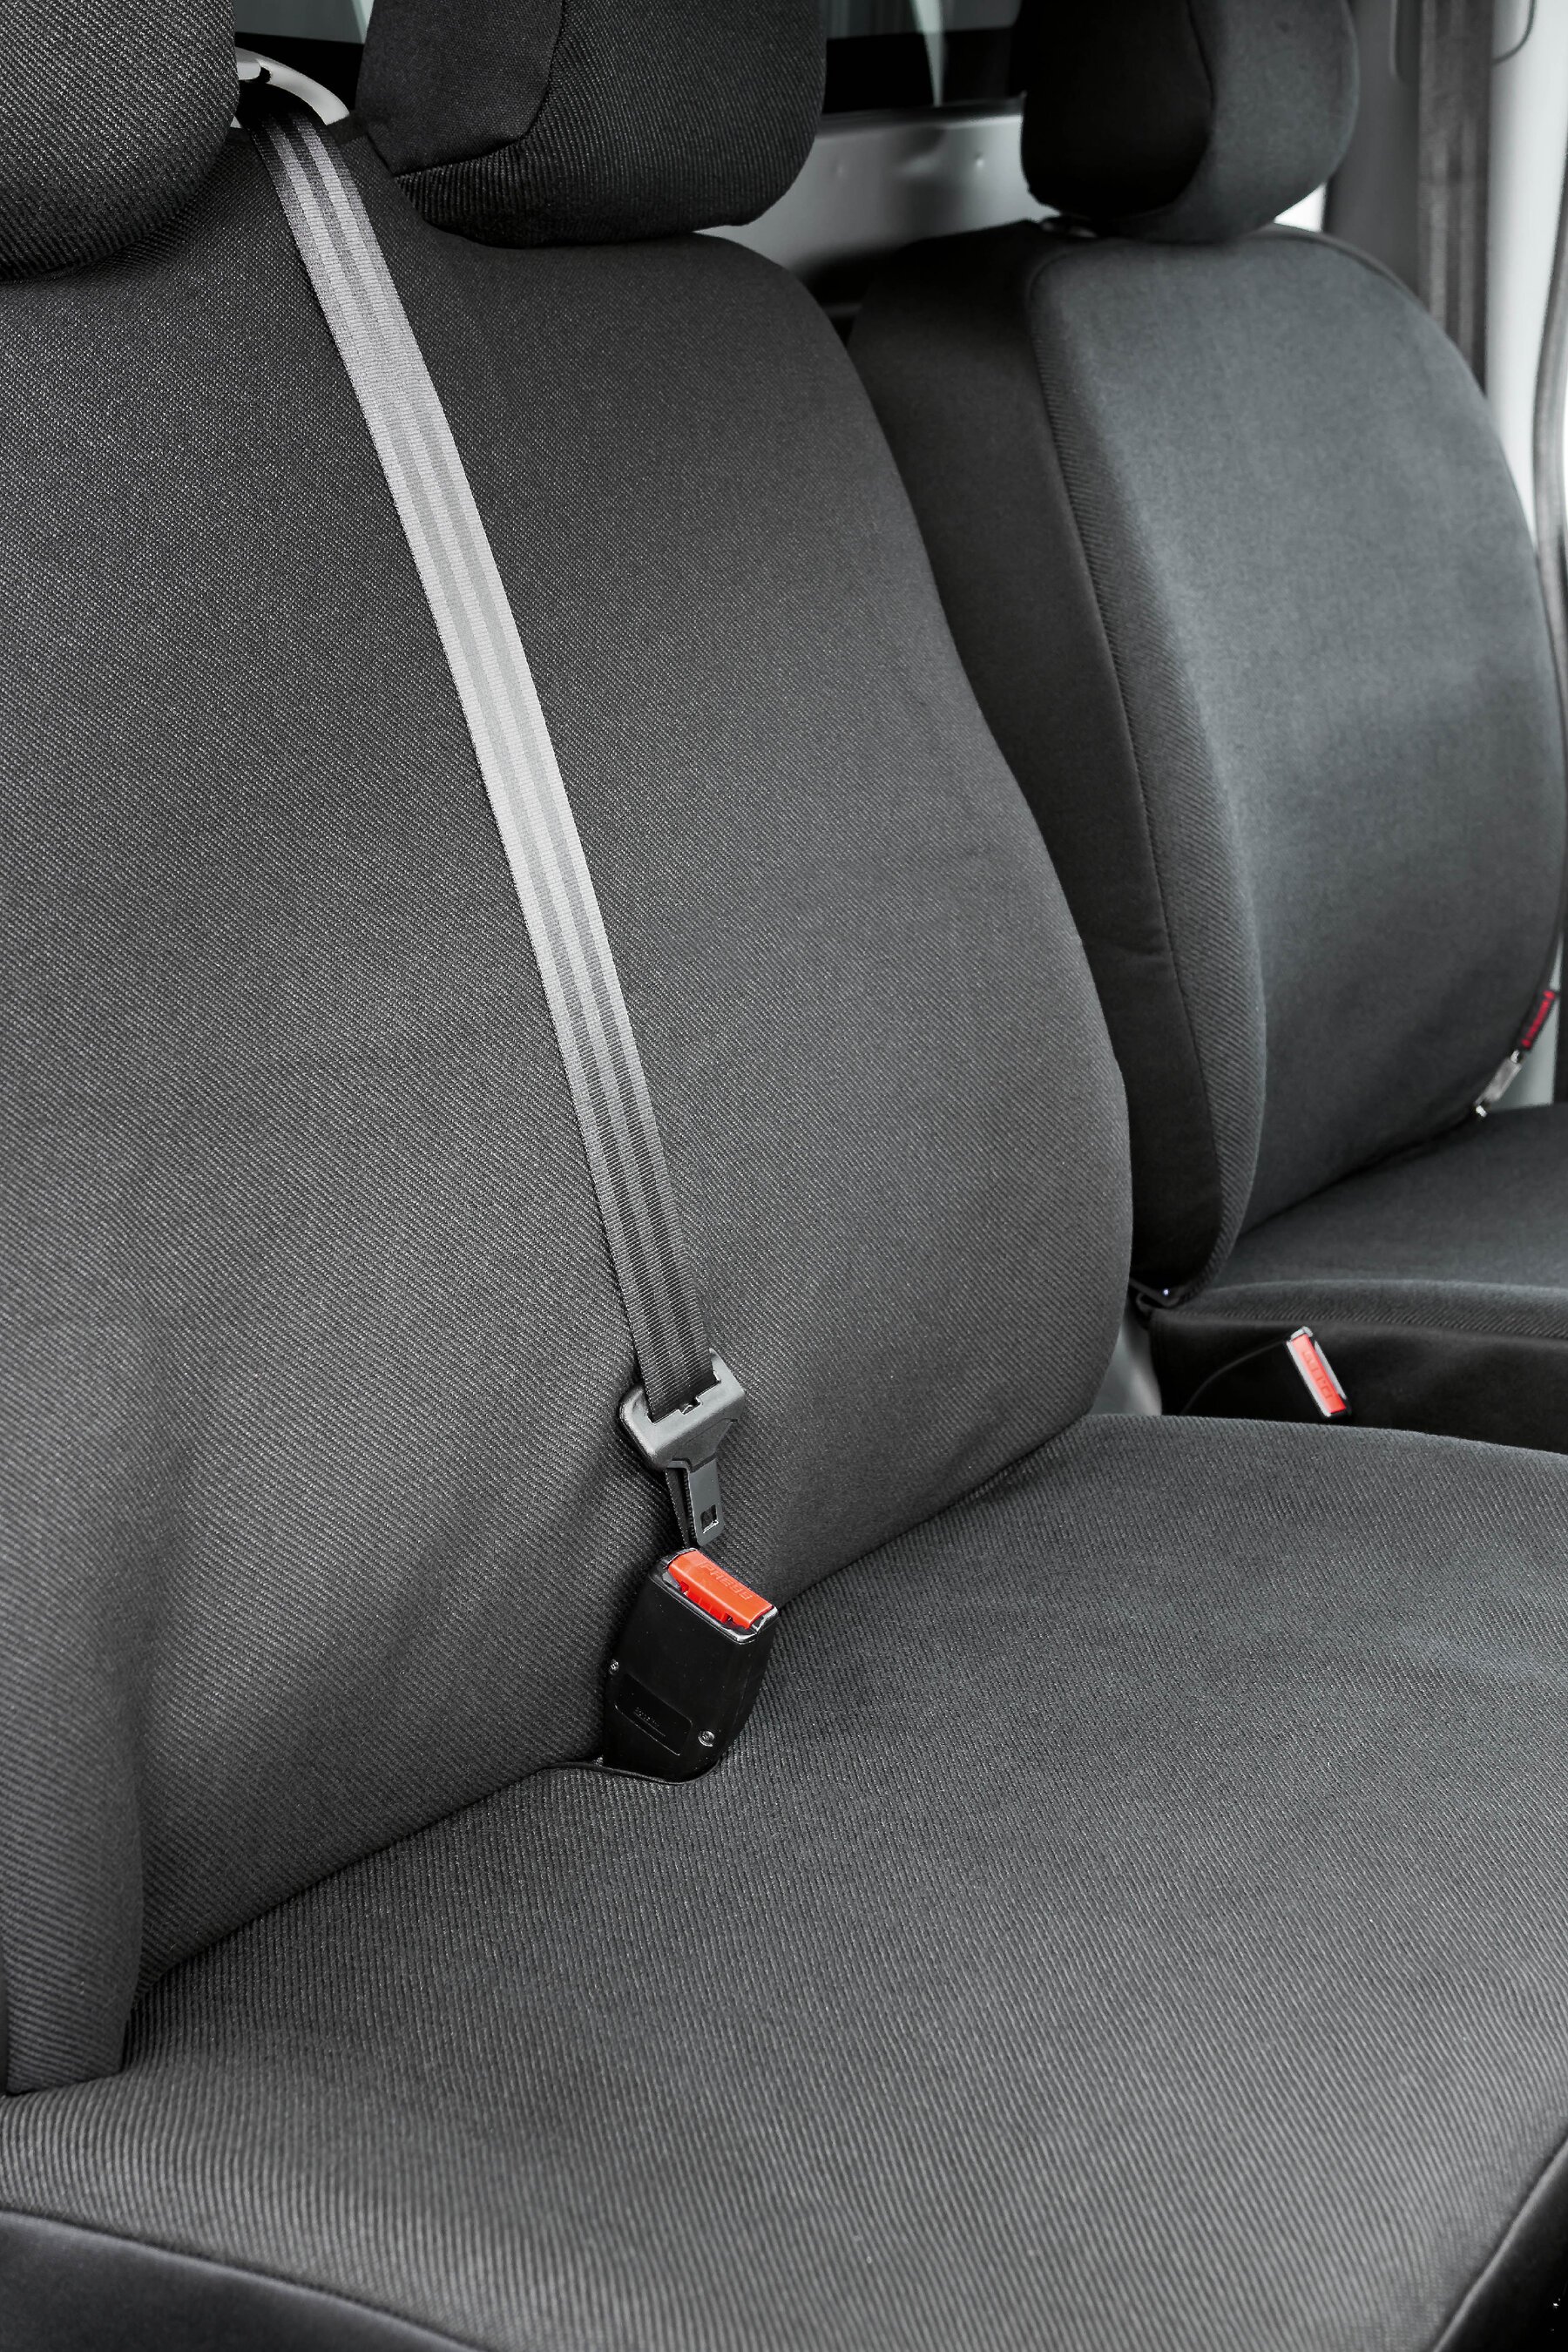 Housse de siège Transporter en tissu pour Opel Vivaro, Renault Traffic, Nissan Primastar, siège simple & double